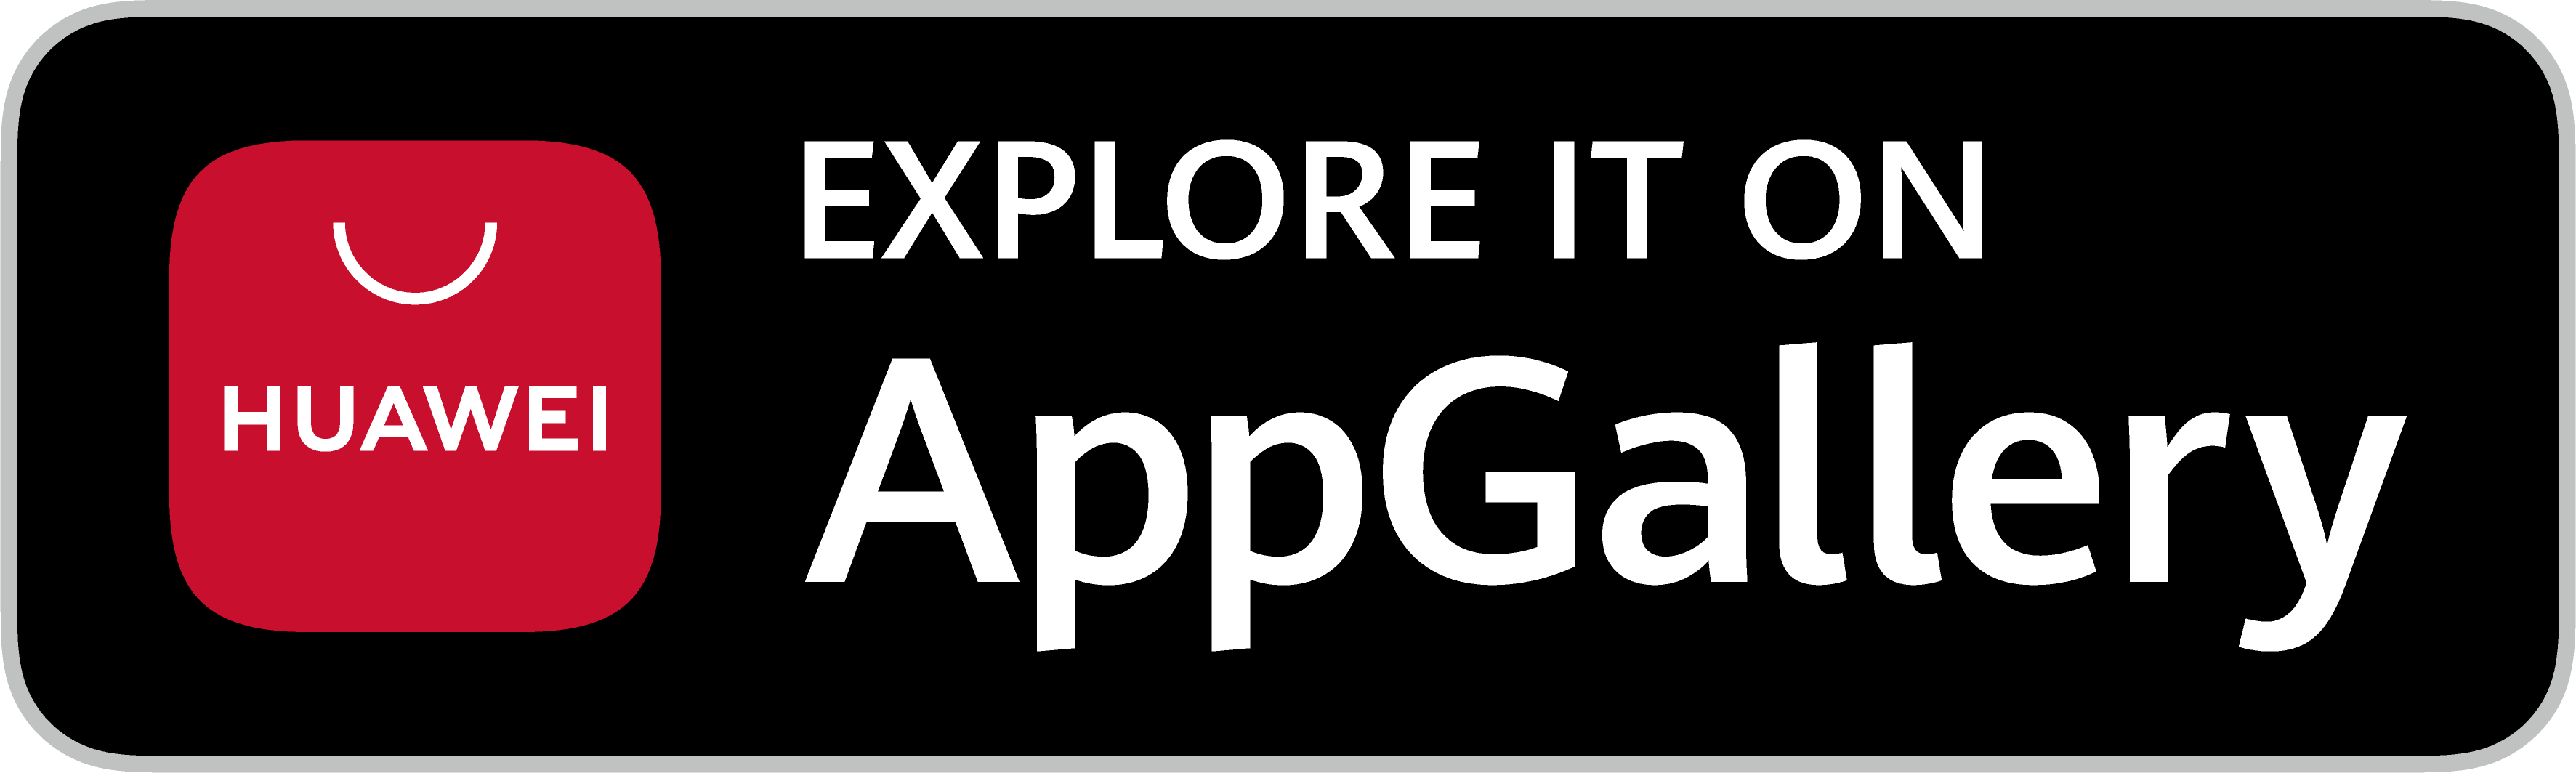 app-gallery